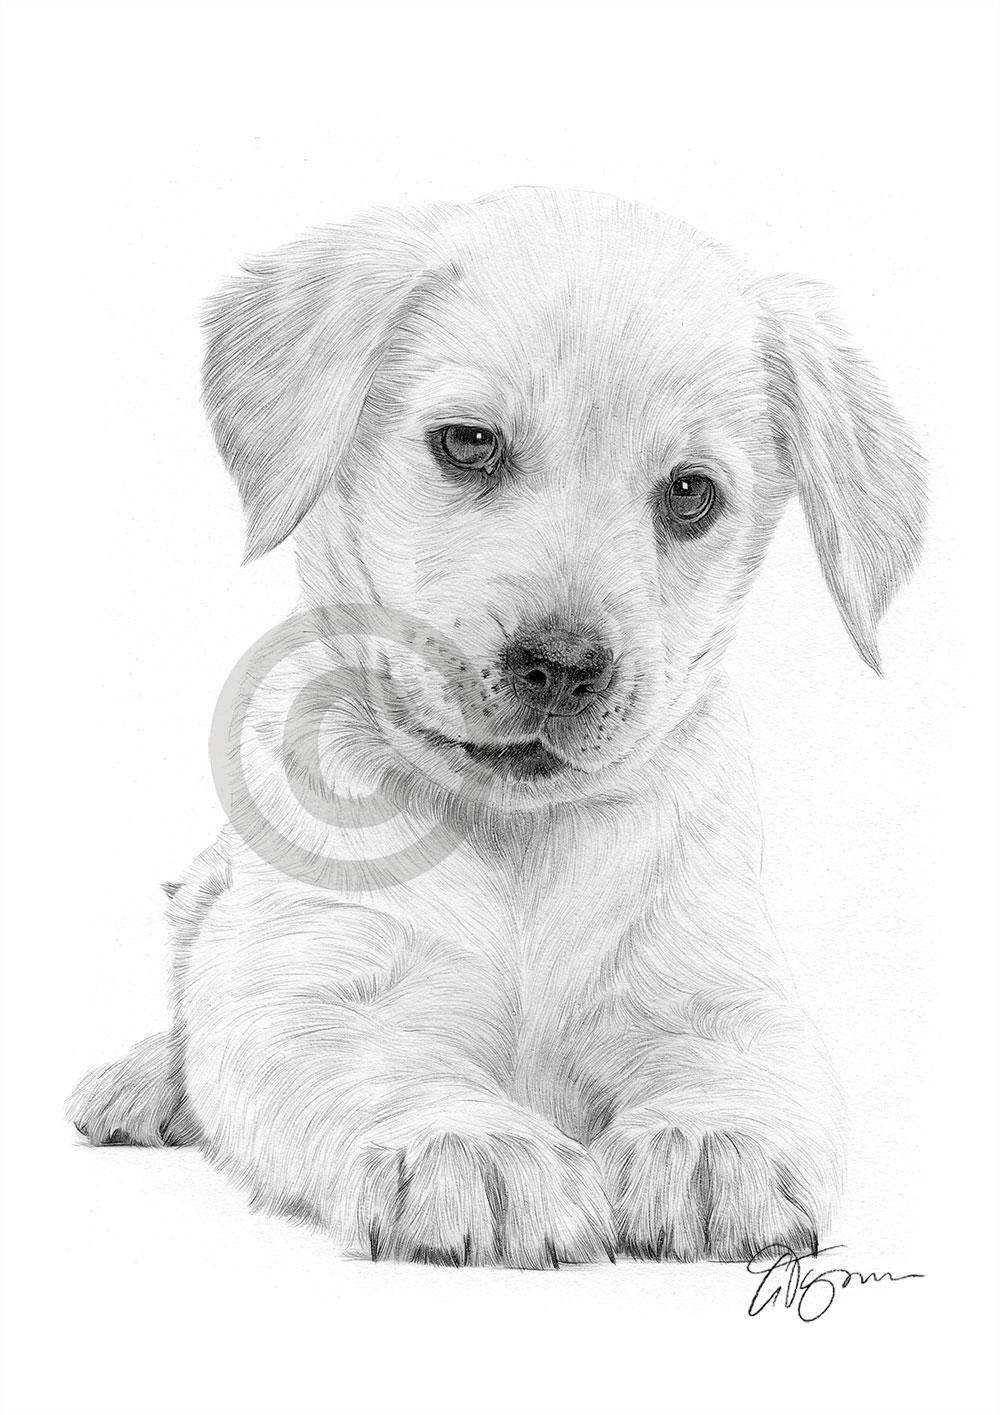 Pencil drawing of a Labrador Retriever puppy by artist Gary Tymon